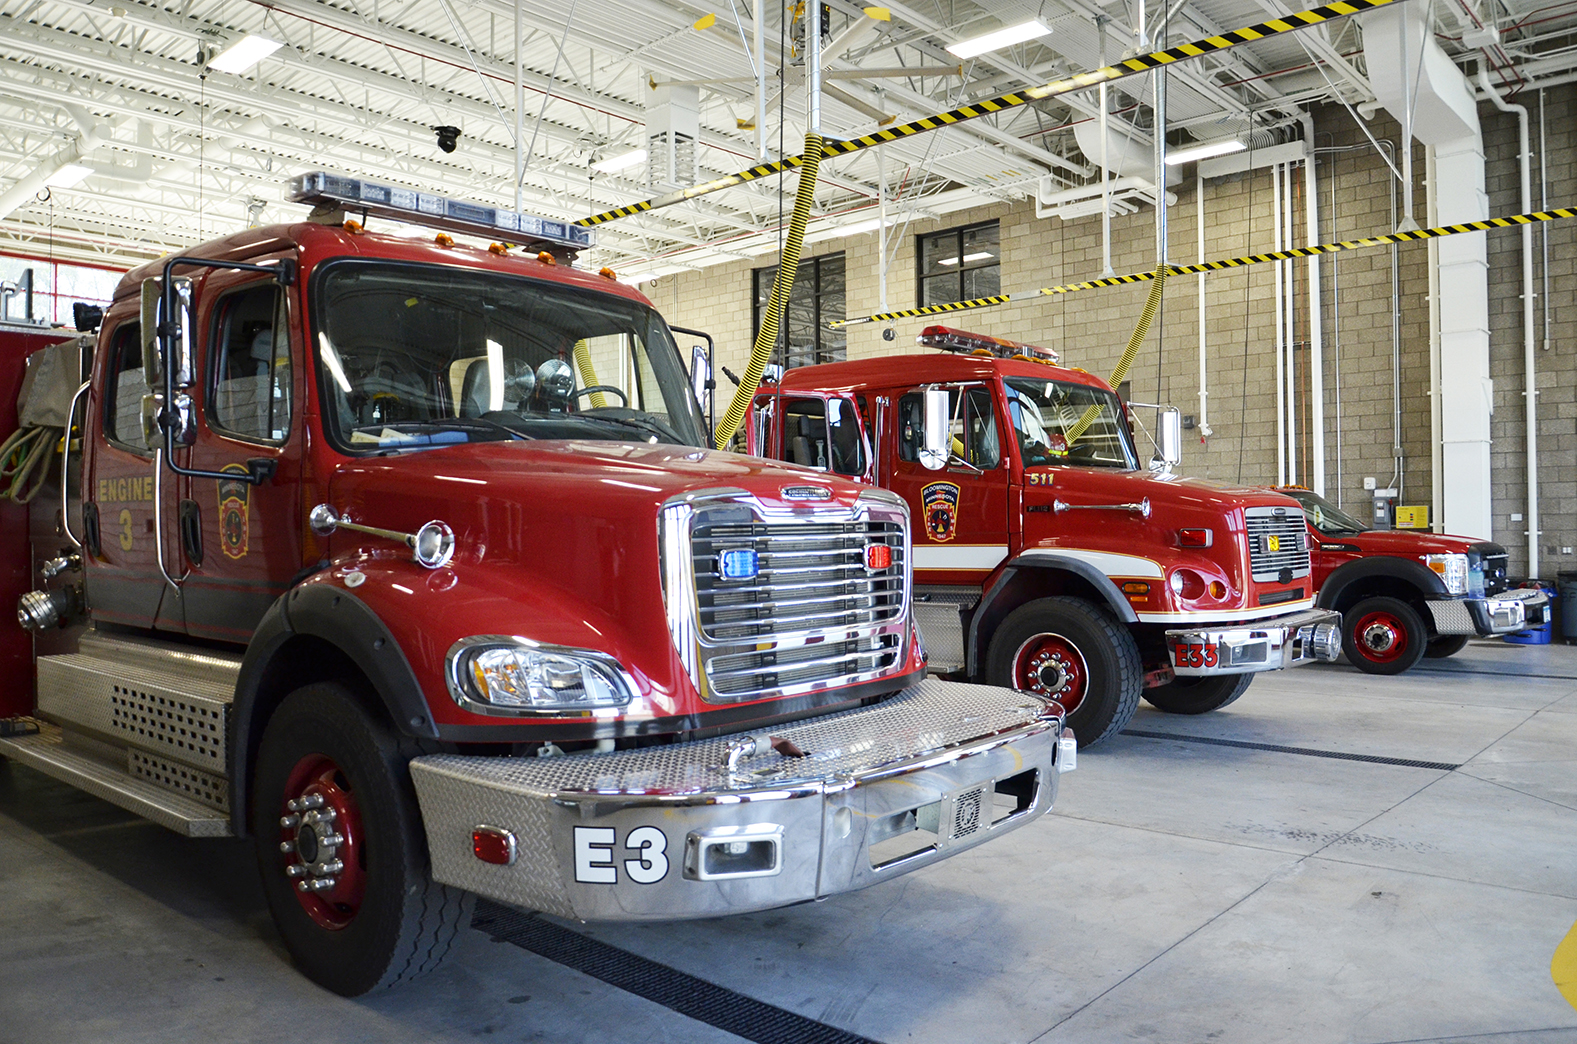 Bloomington Fire Station 3 trucks parked inside